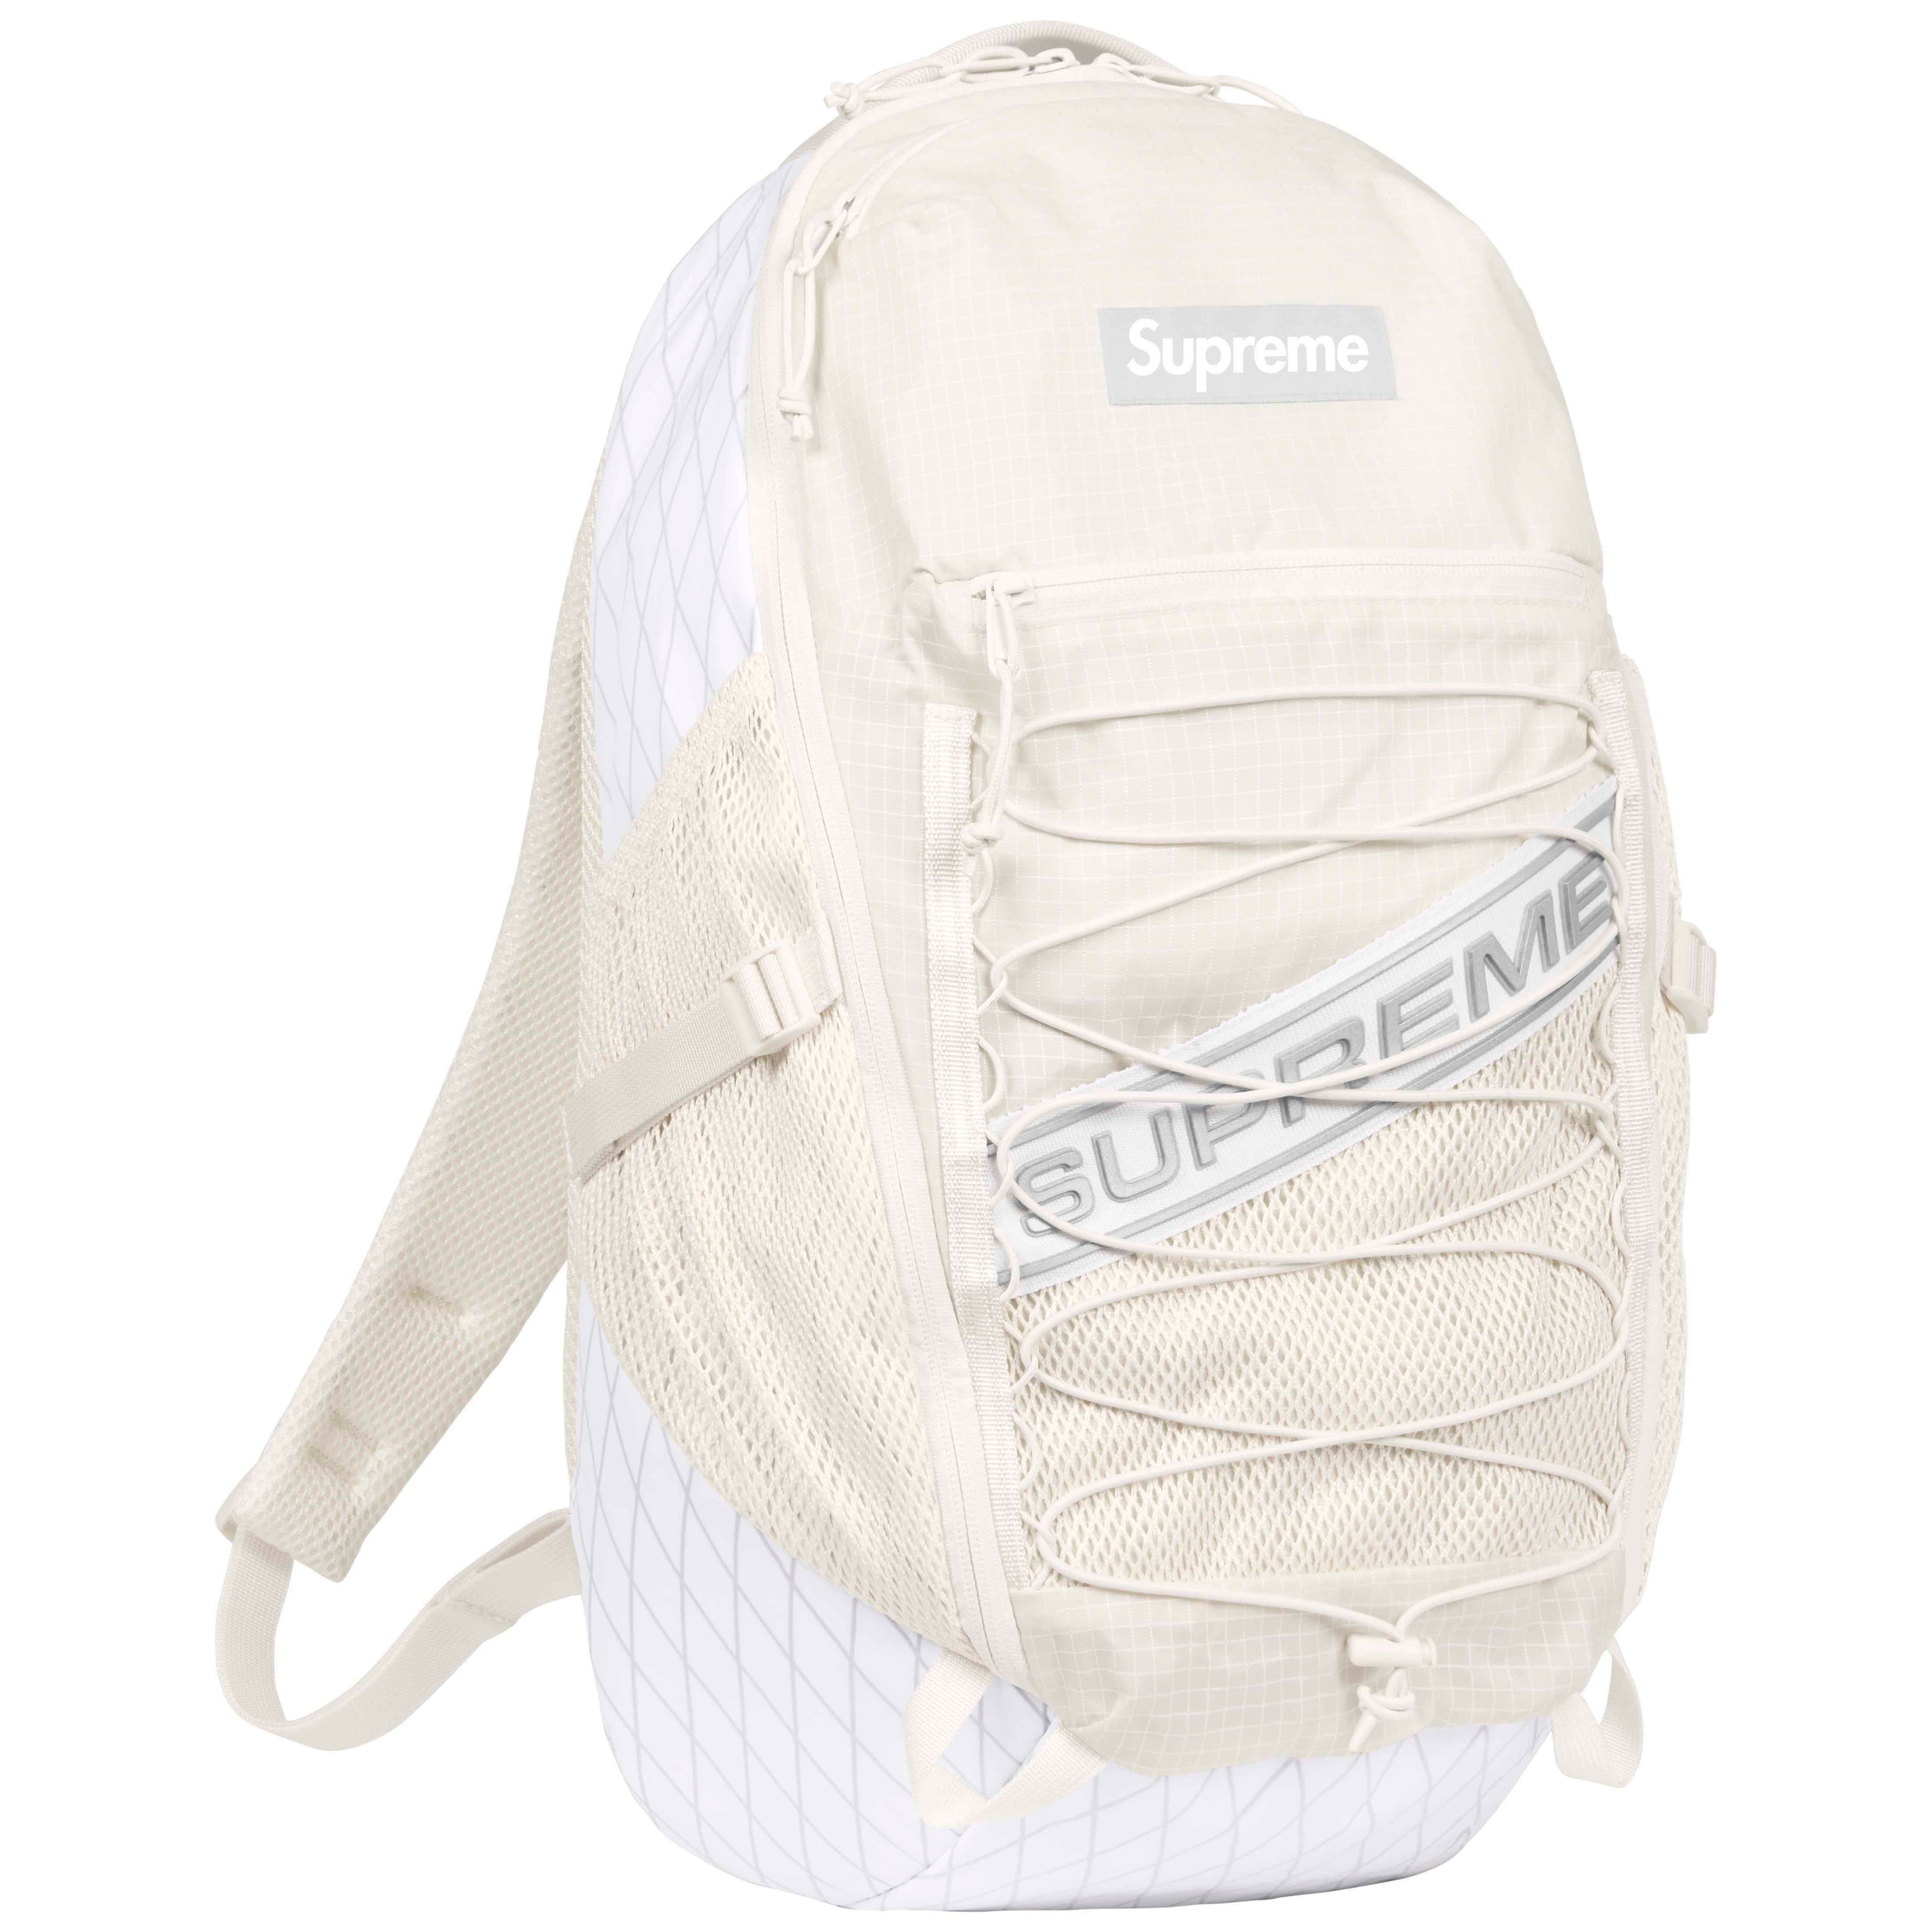 FW17 Supreme backpack  Supreme backpack, Louis vuitton supreme